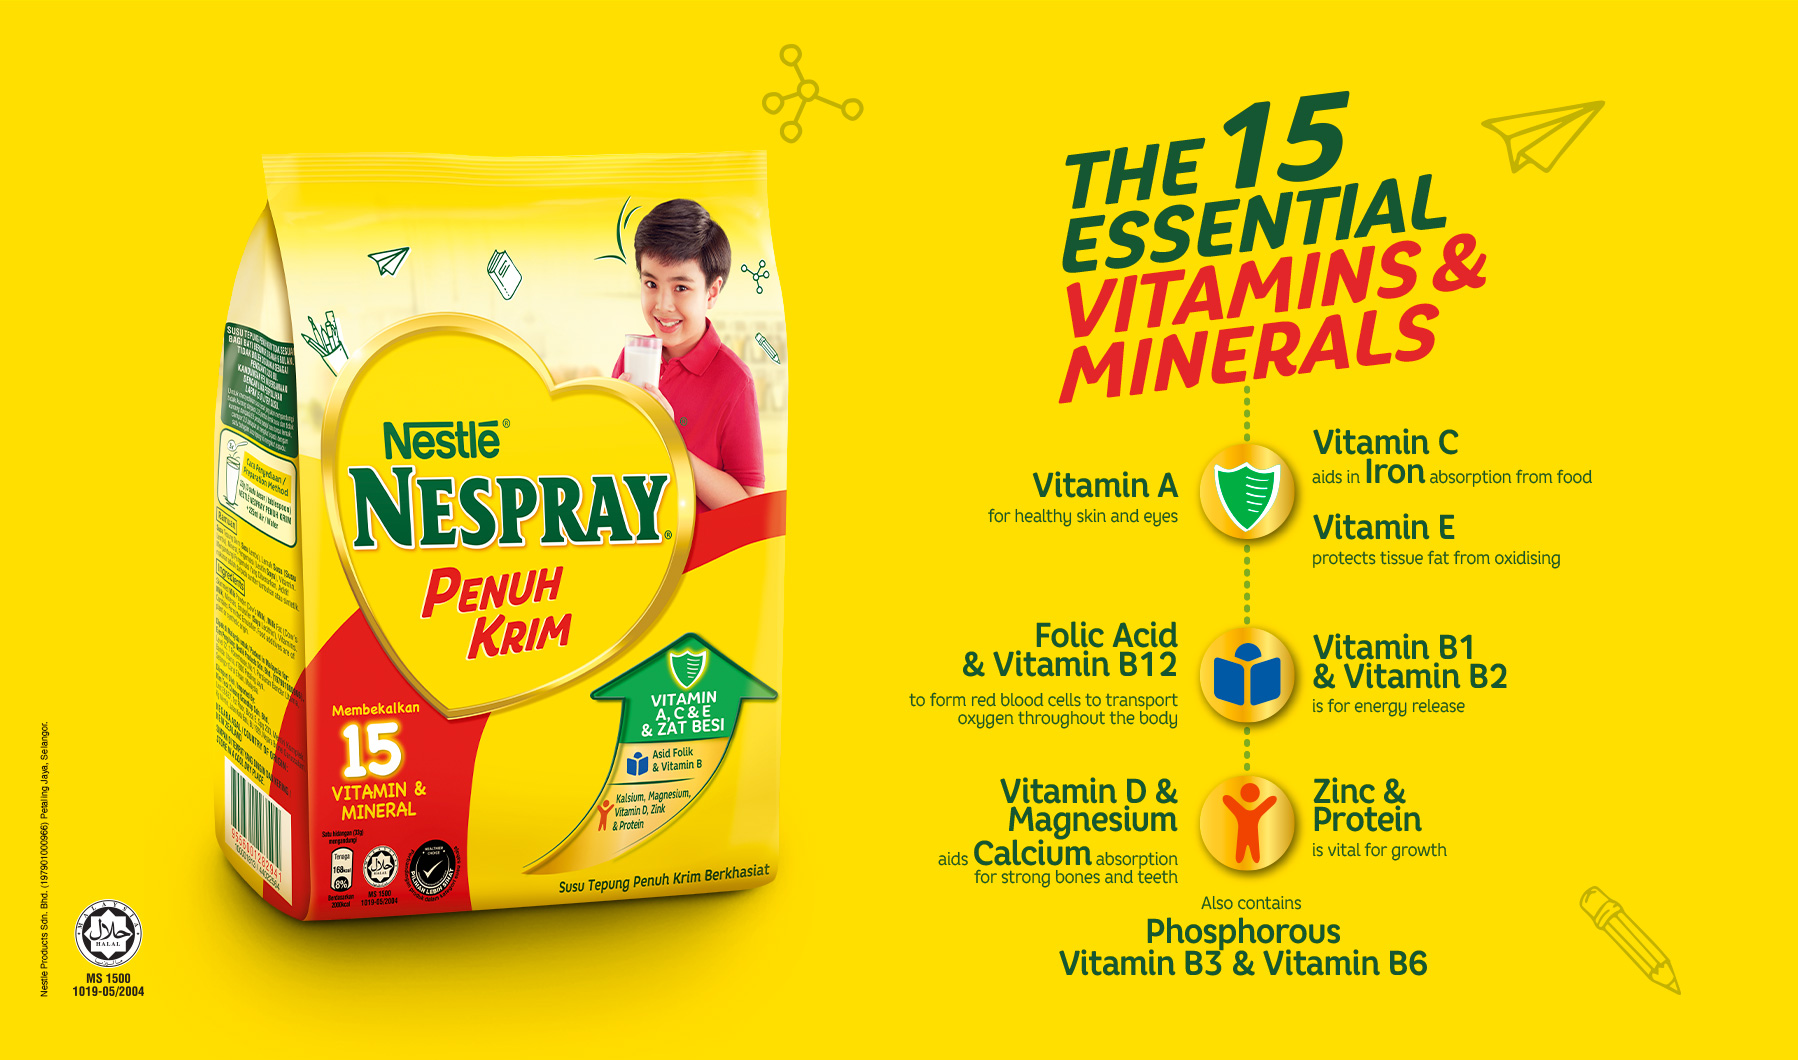 The 15 Essential Vitamins & Minerals